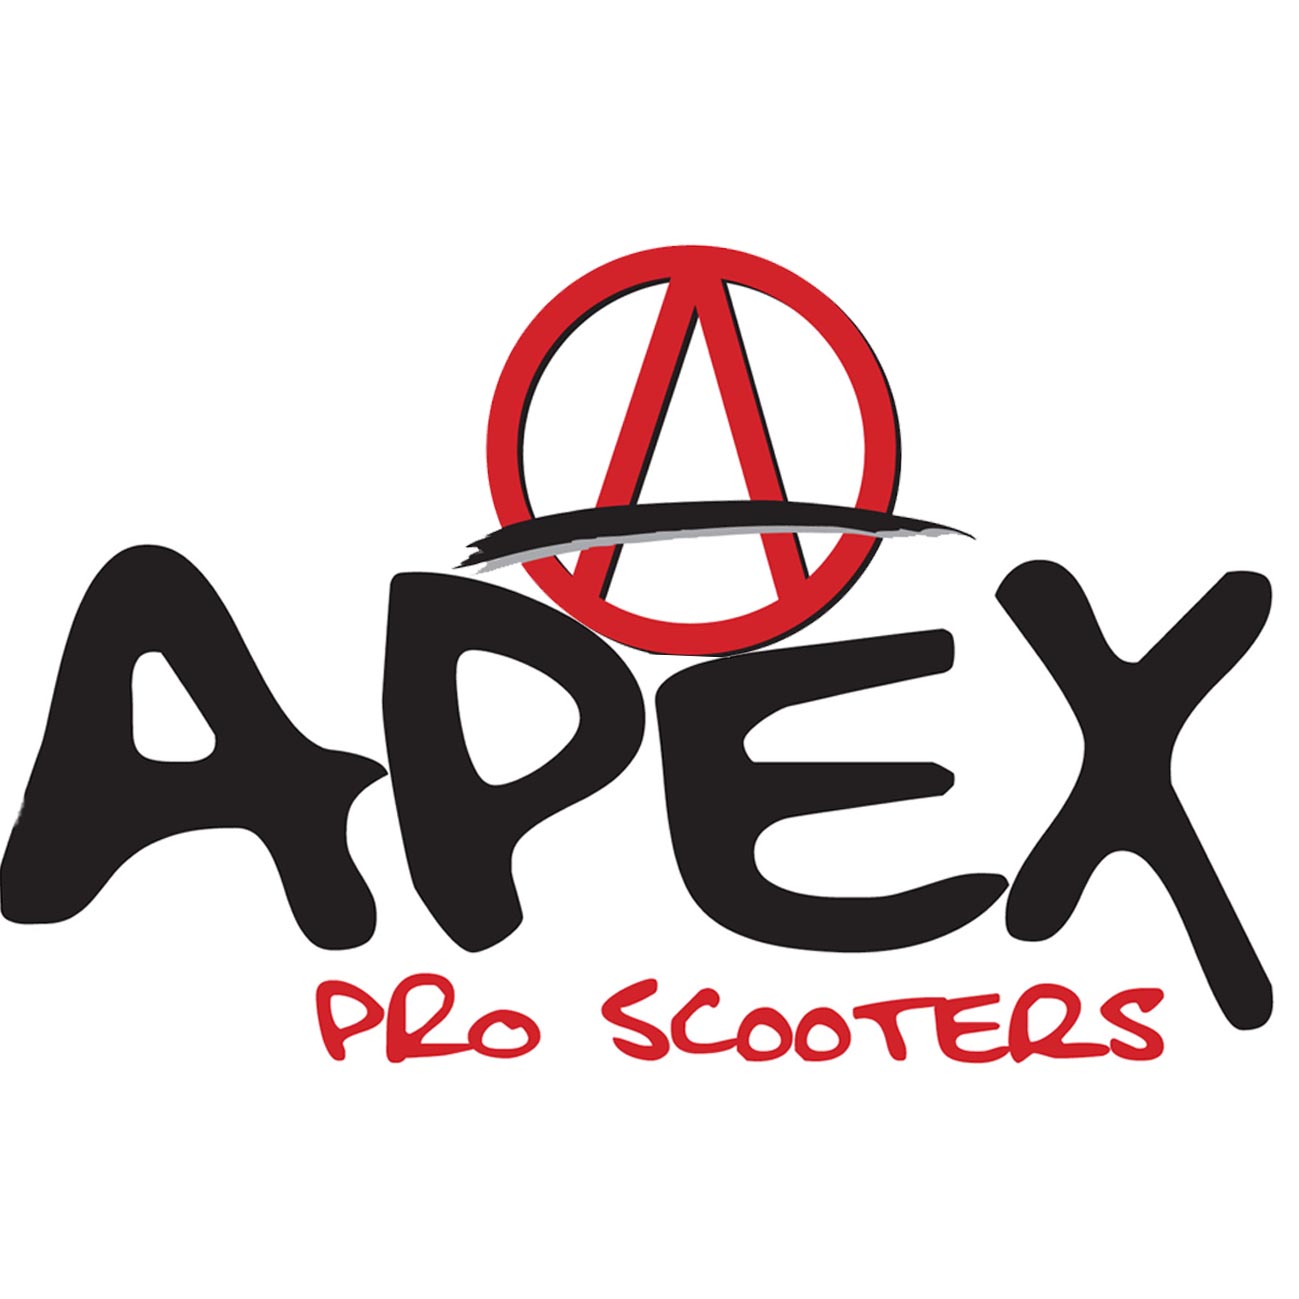 Apex scooter Logos